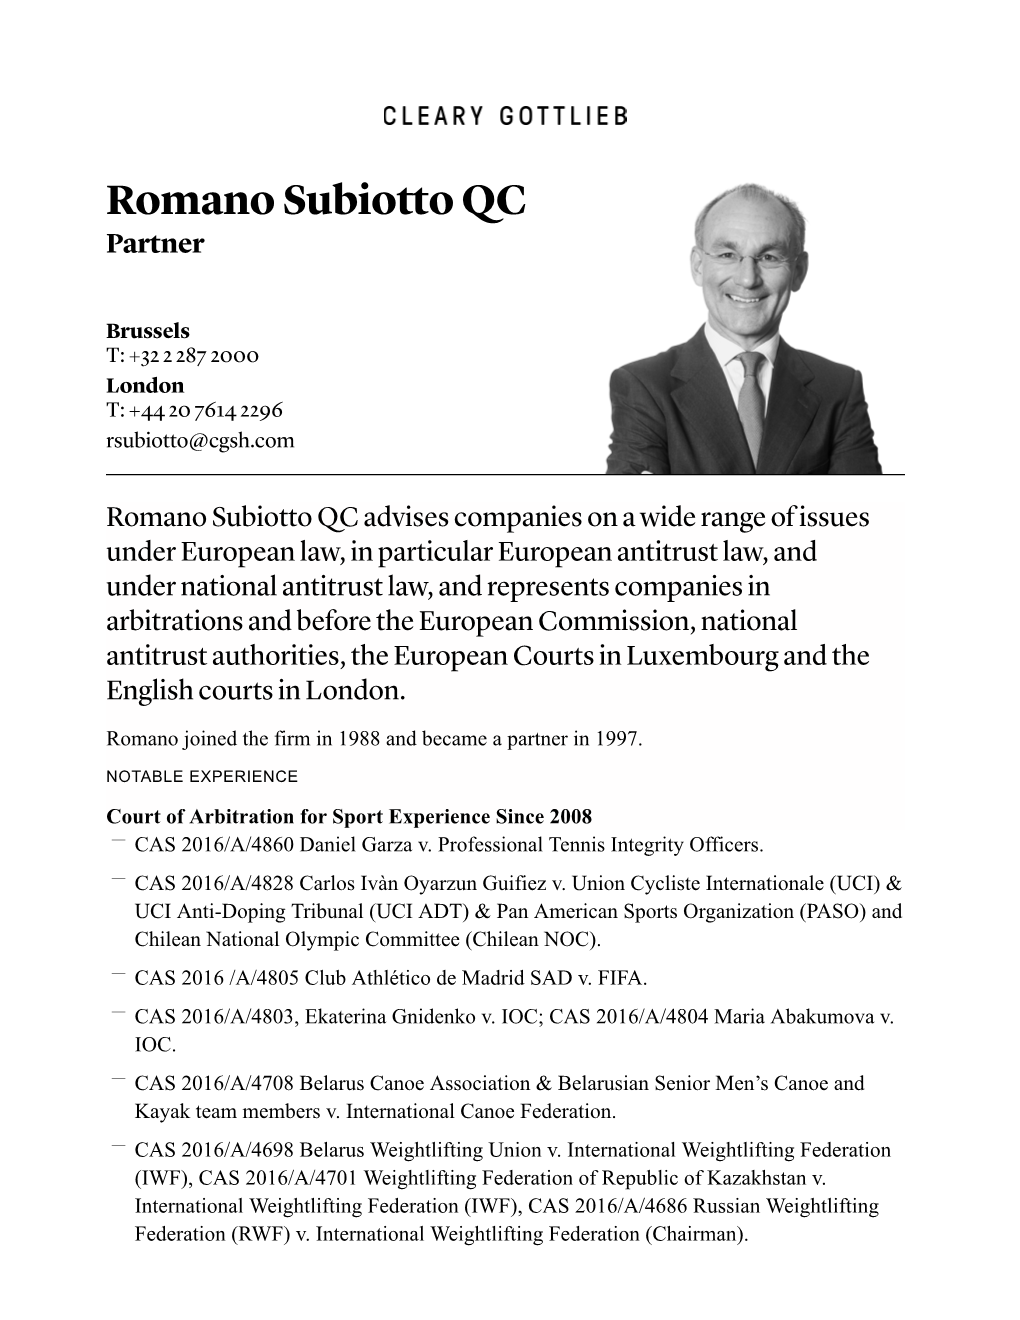 Romano Subiotto QC Partner